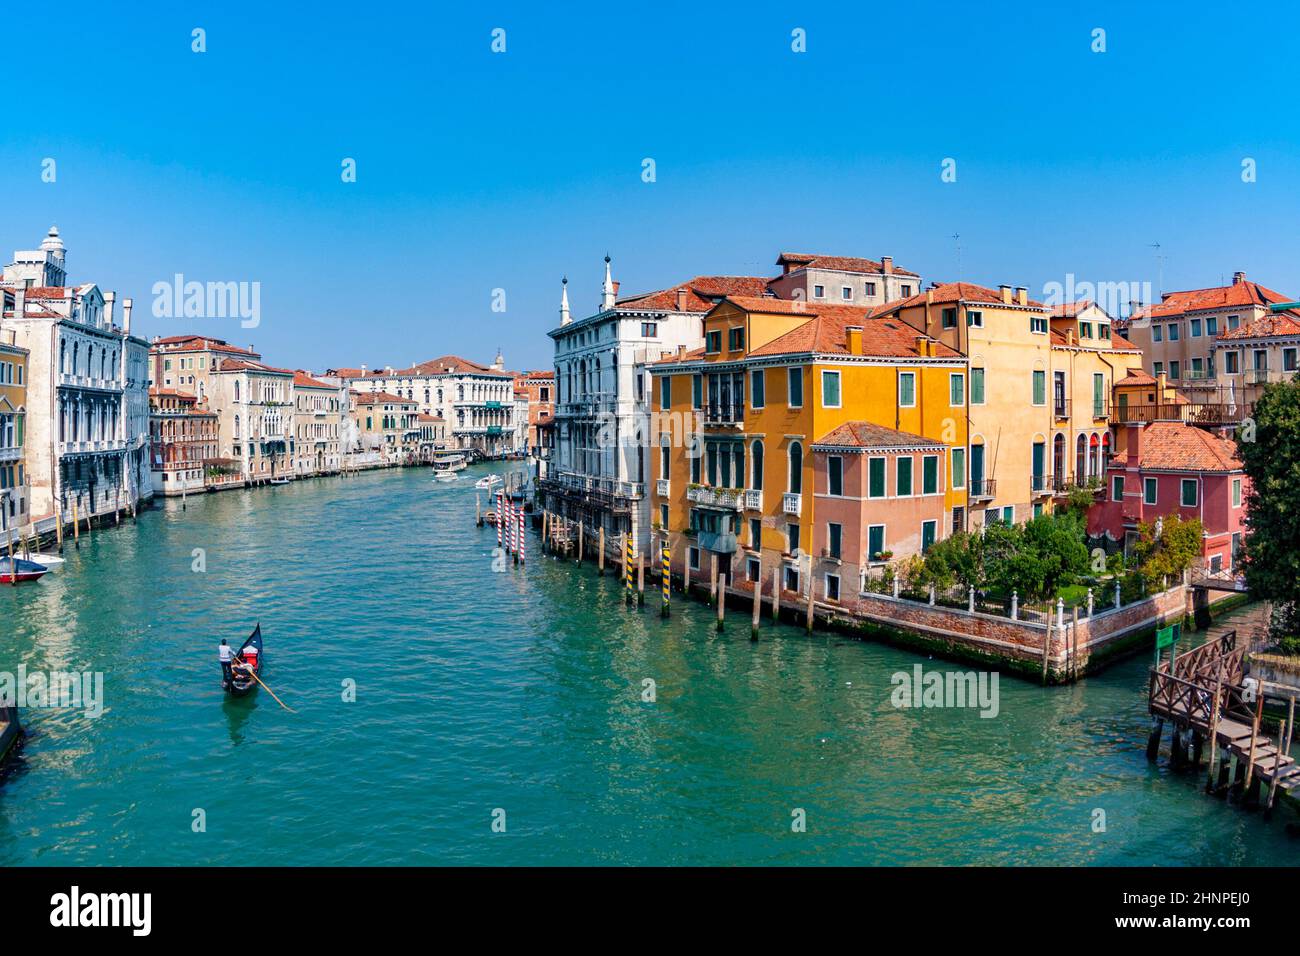 Die Leute genießen die Gondelfahrt im Canale Grande in Venedig Stockfoto